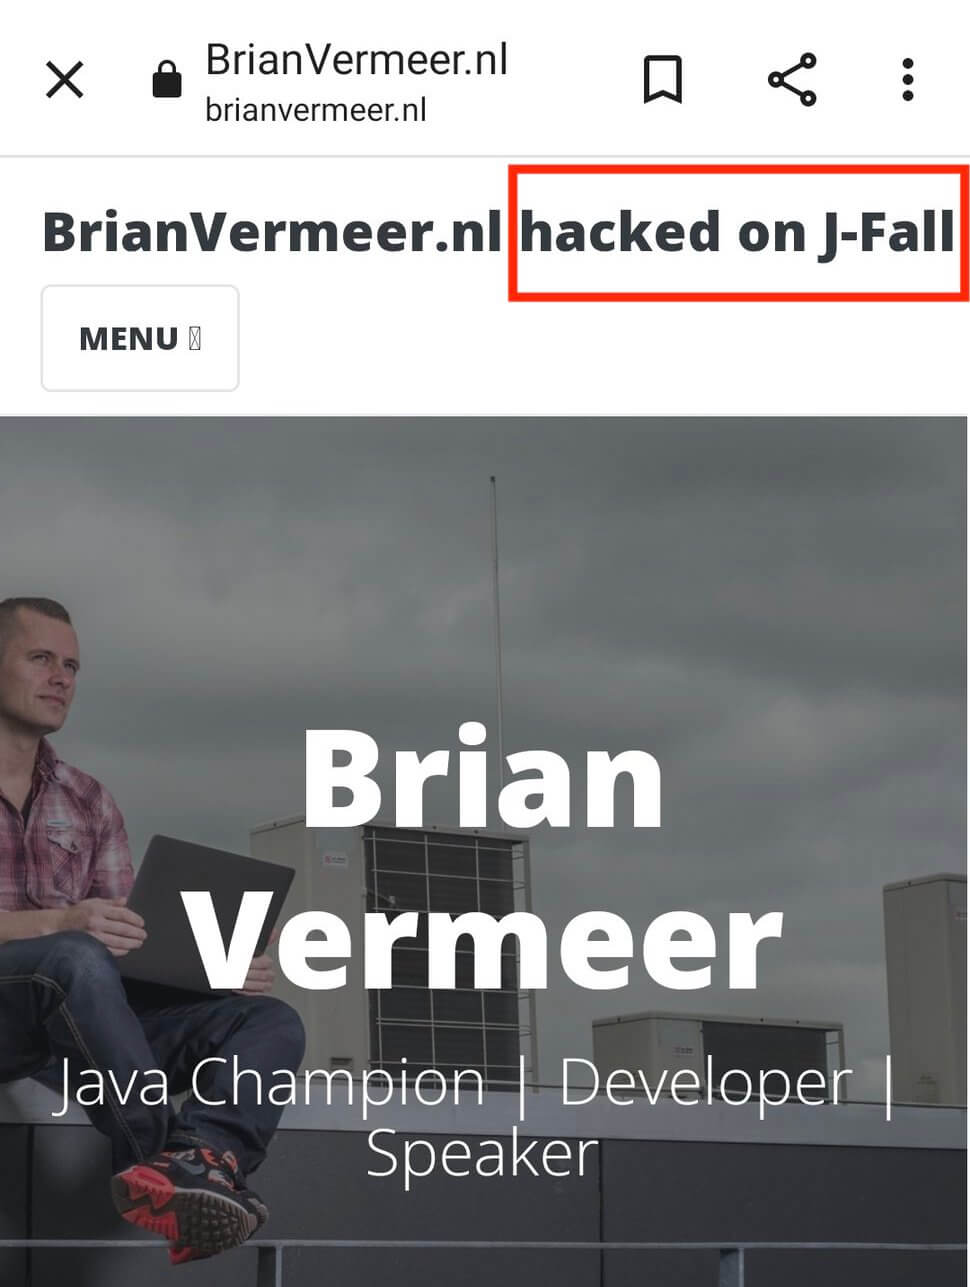 BrianVermeer.nl hacked on J-Fall 2021